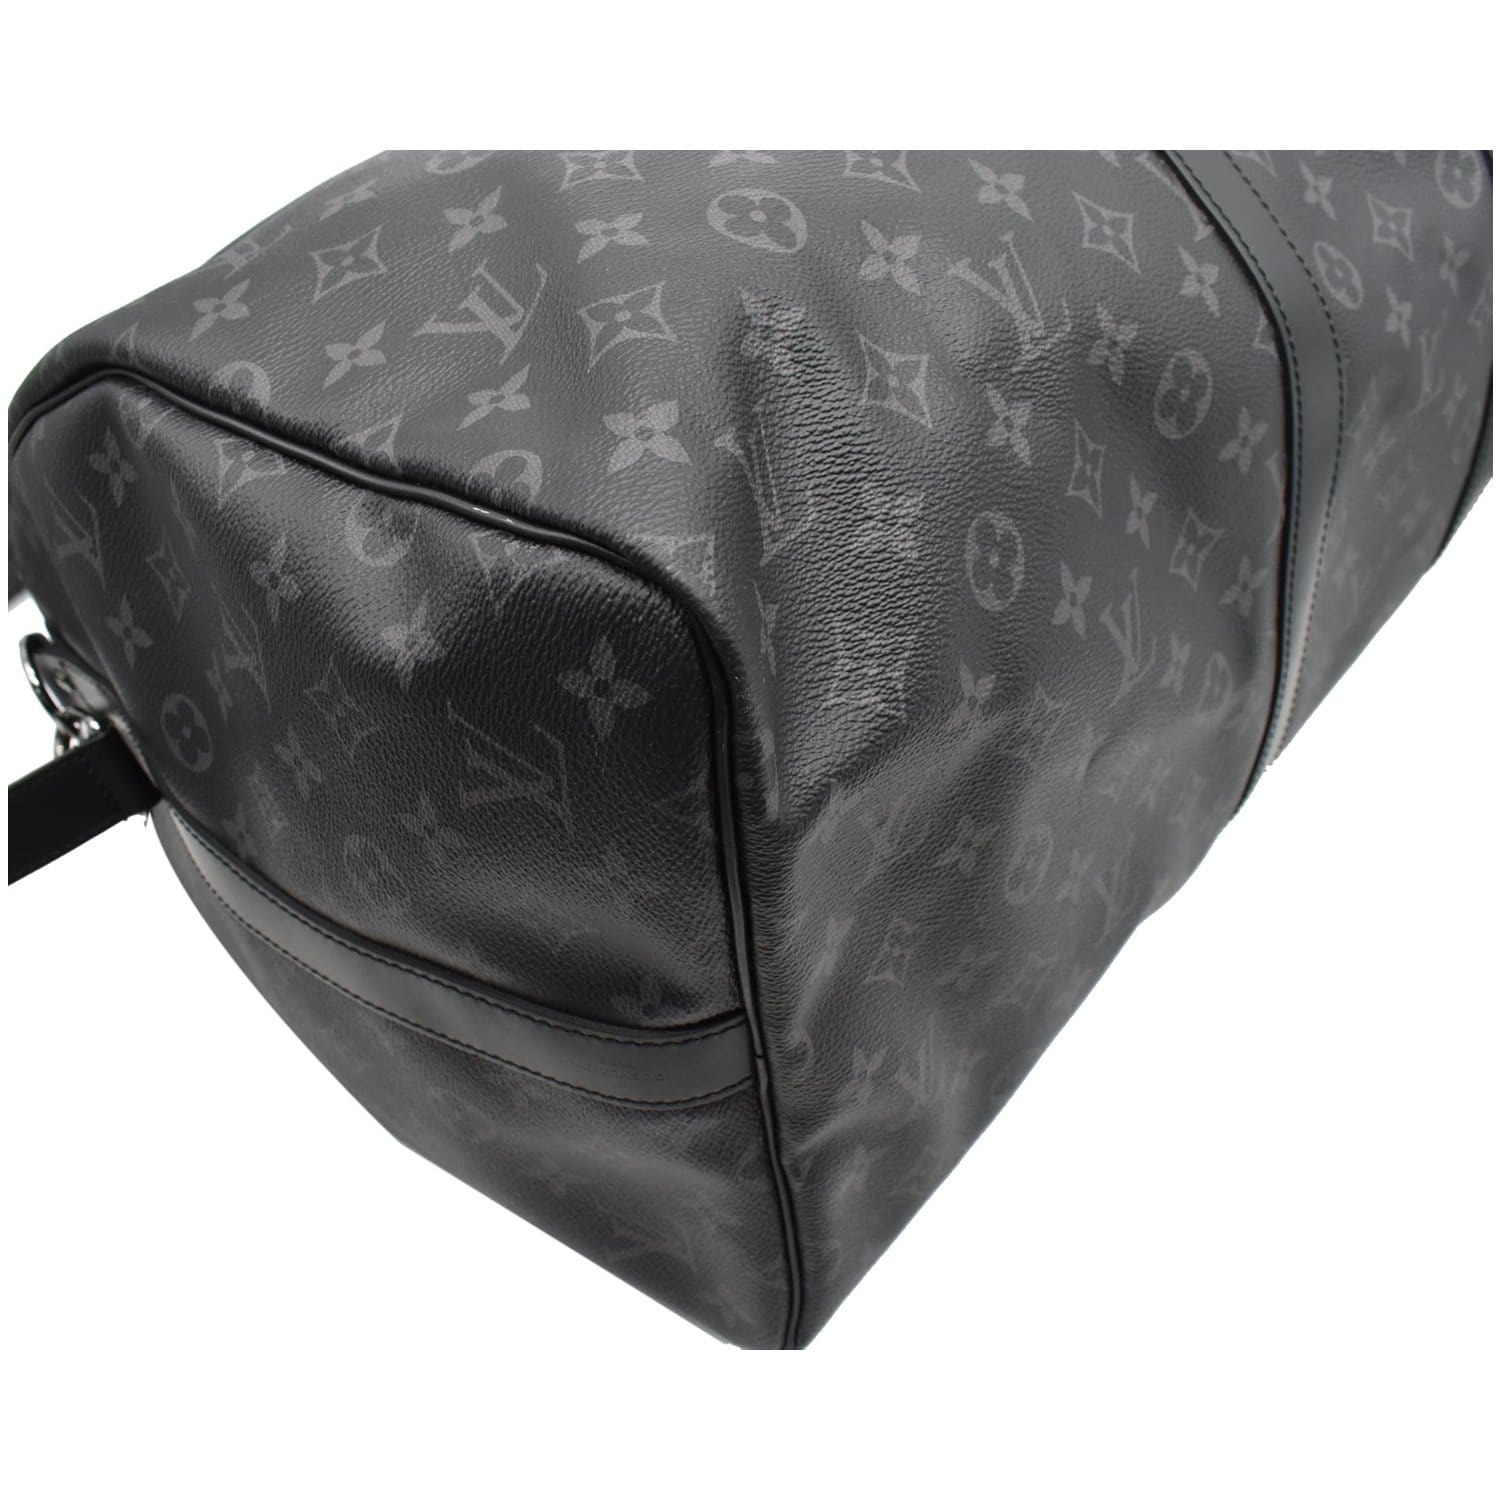 Louis Vuitton Monogram Eclipse Keepall Bandouliere 55 Duffle Bag